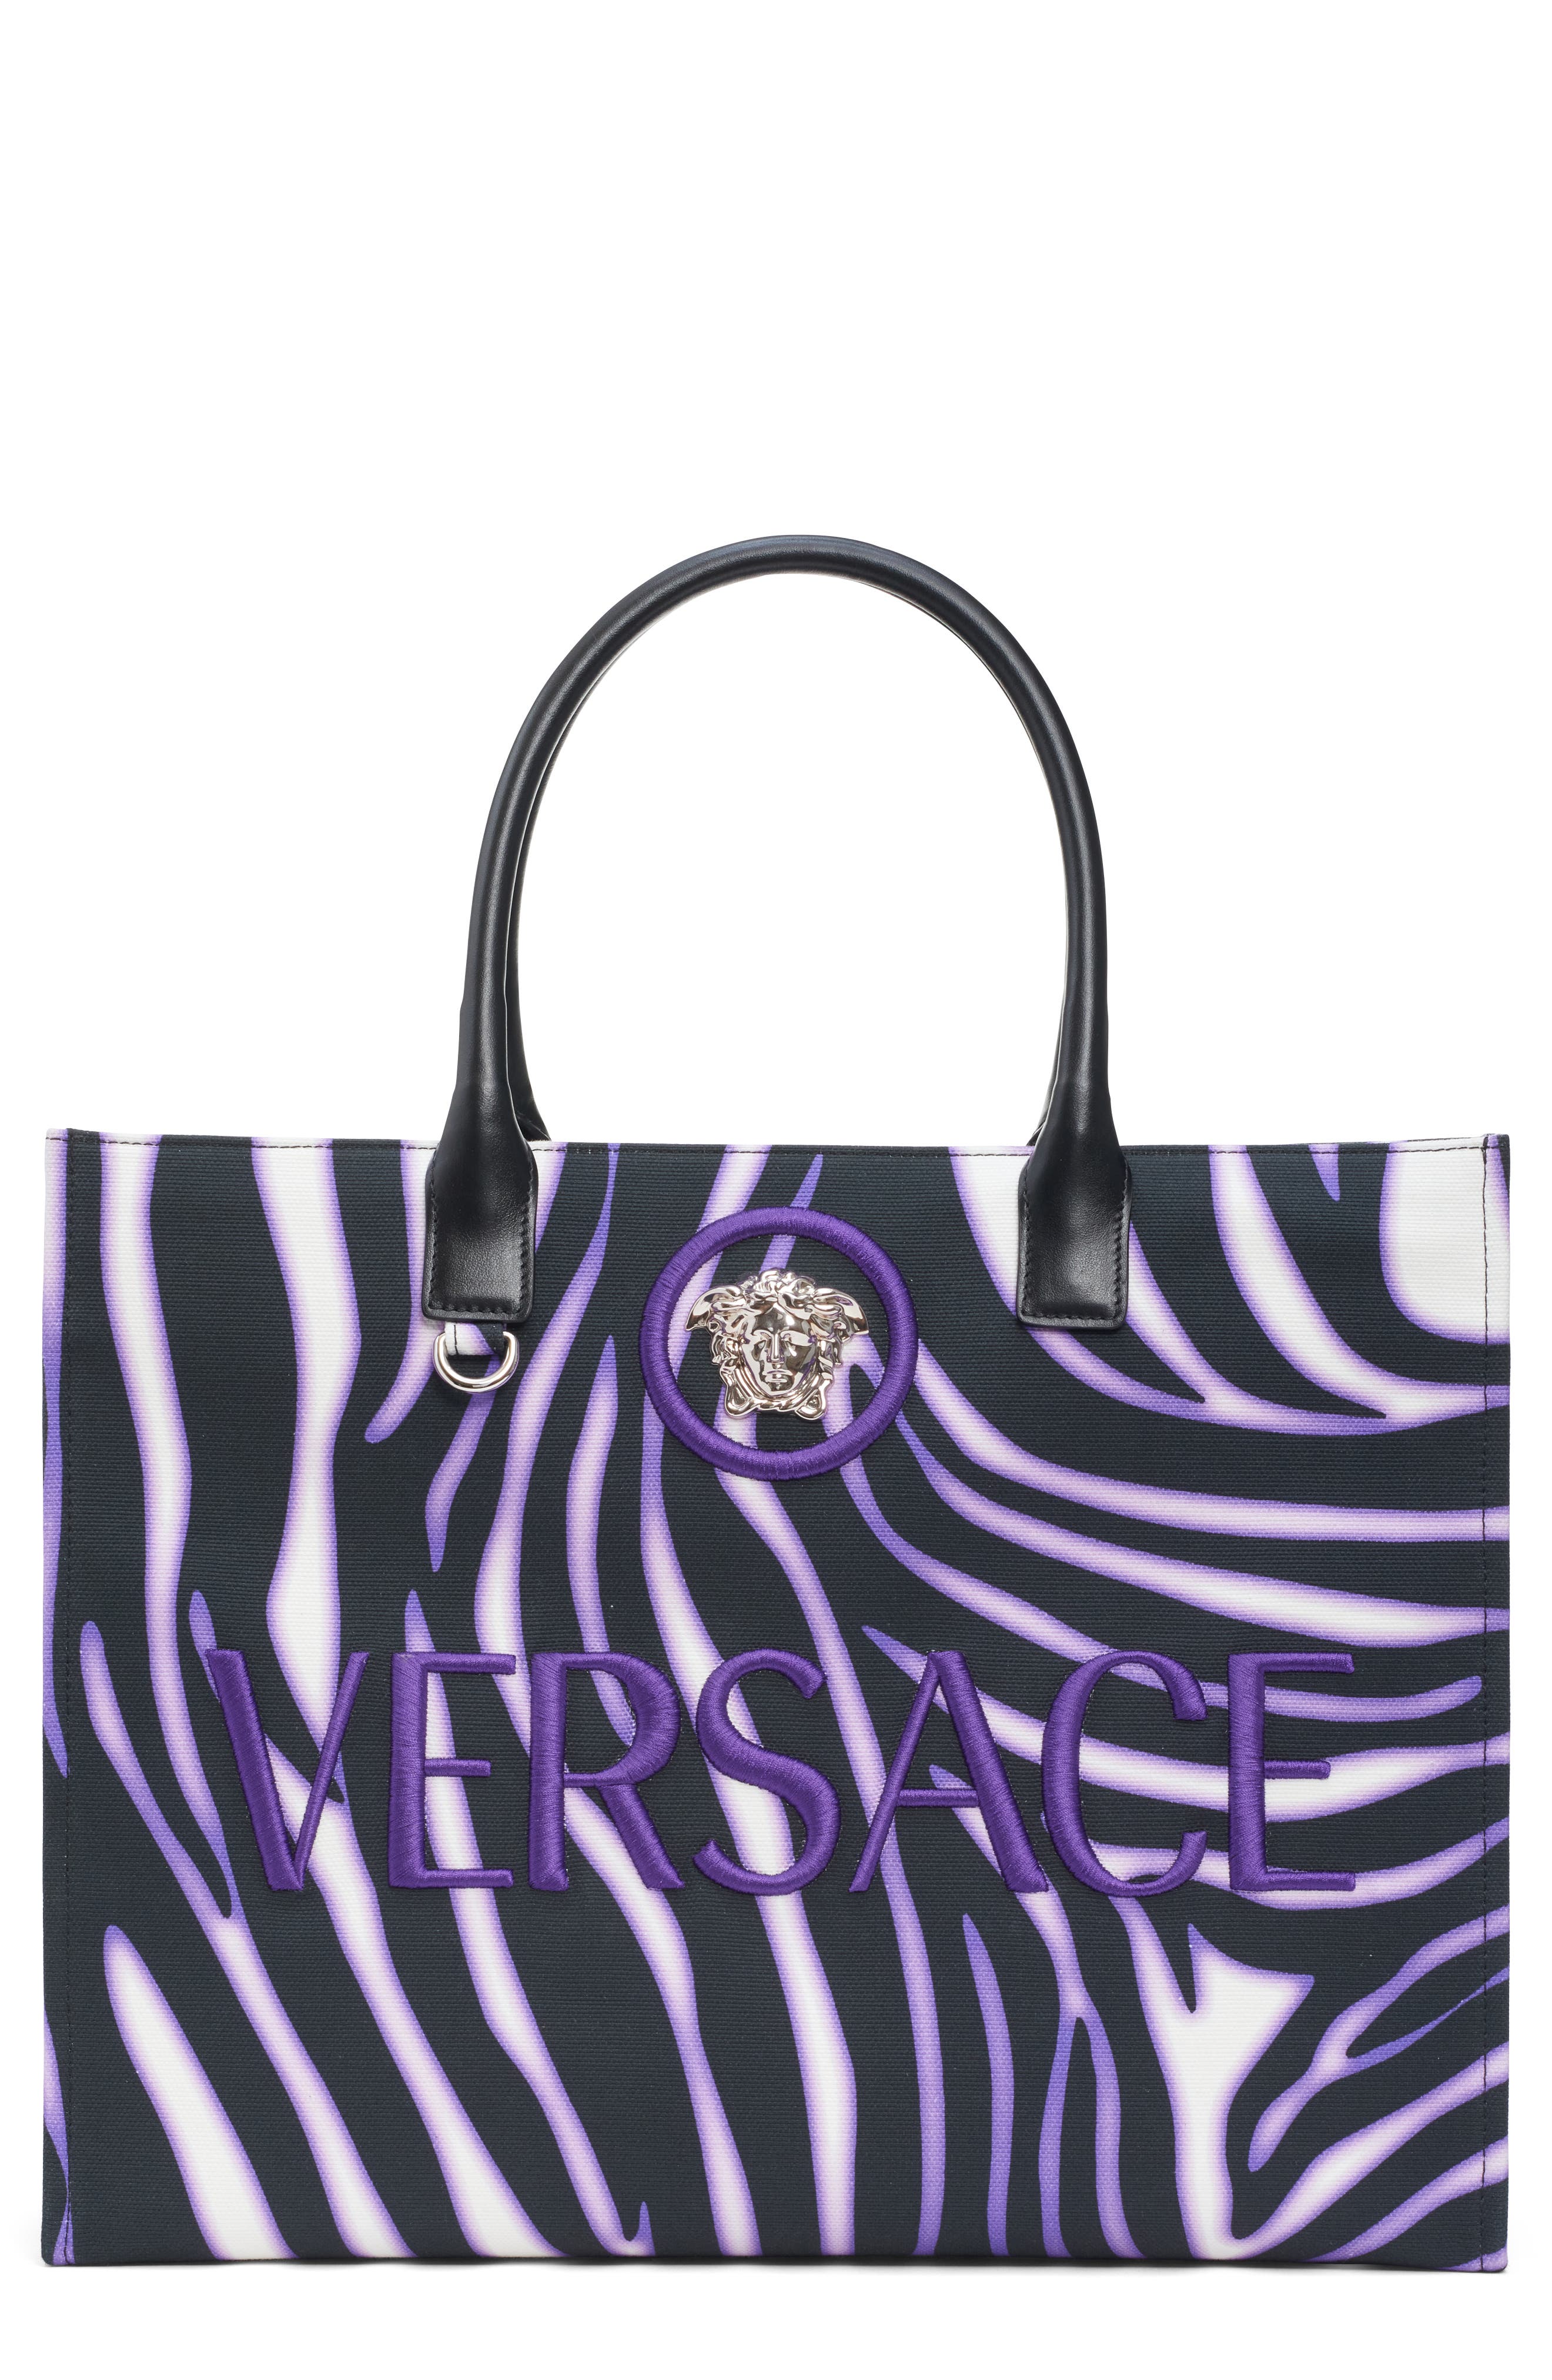 Versace La Madusa White & Black Large Tote Bag